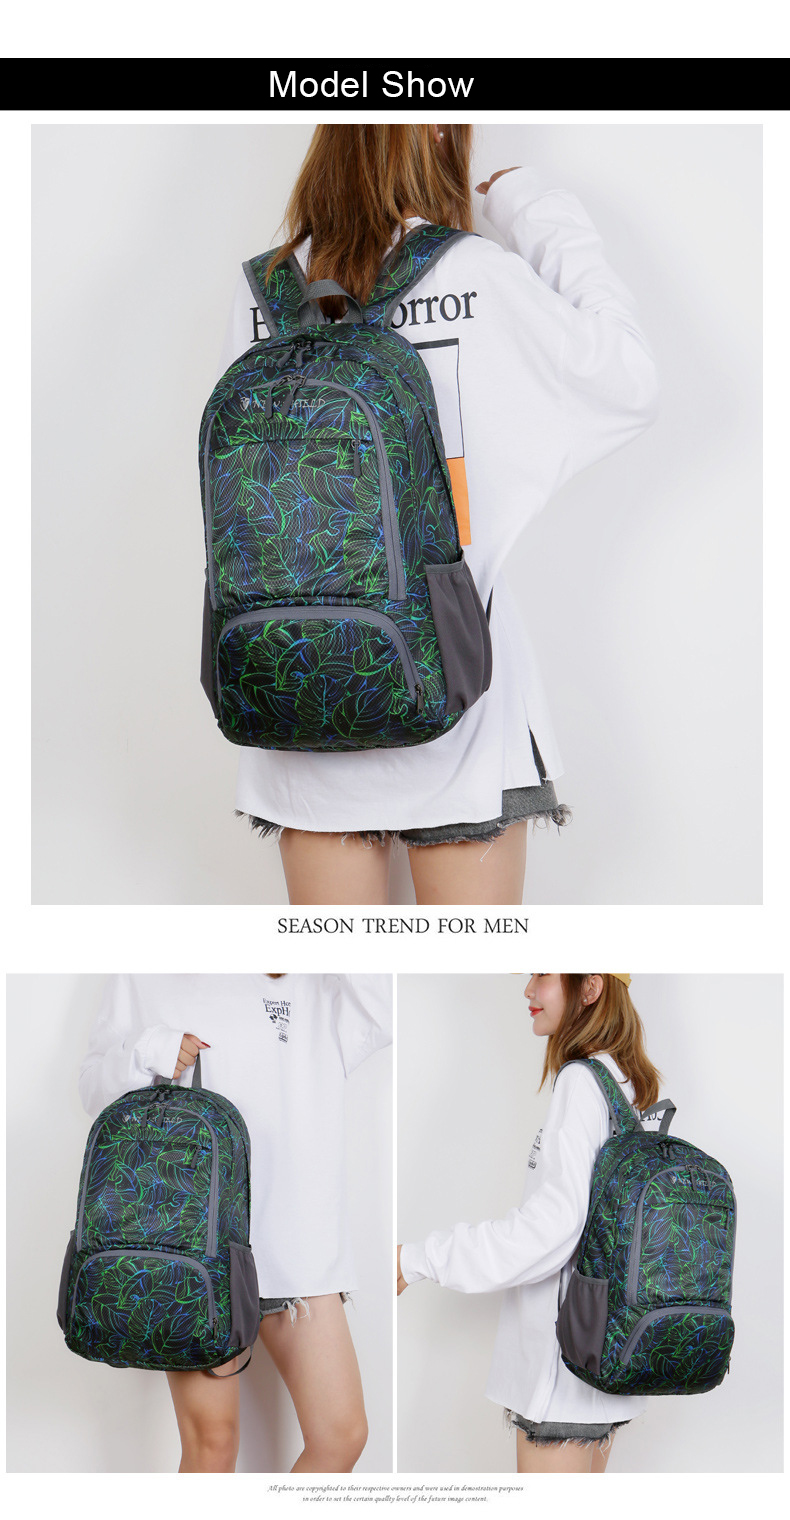 Custom Logo Printing Unisex School College Book мешок Bookbage большой емкость Mochilas Travel Backck Sacks Bags